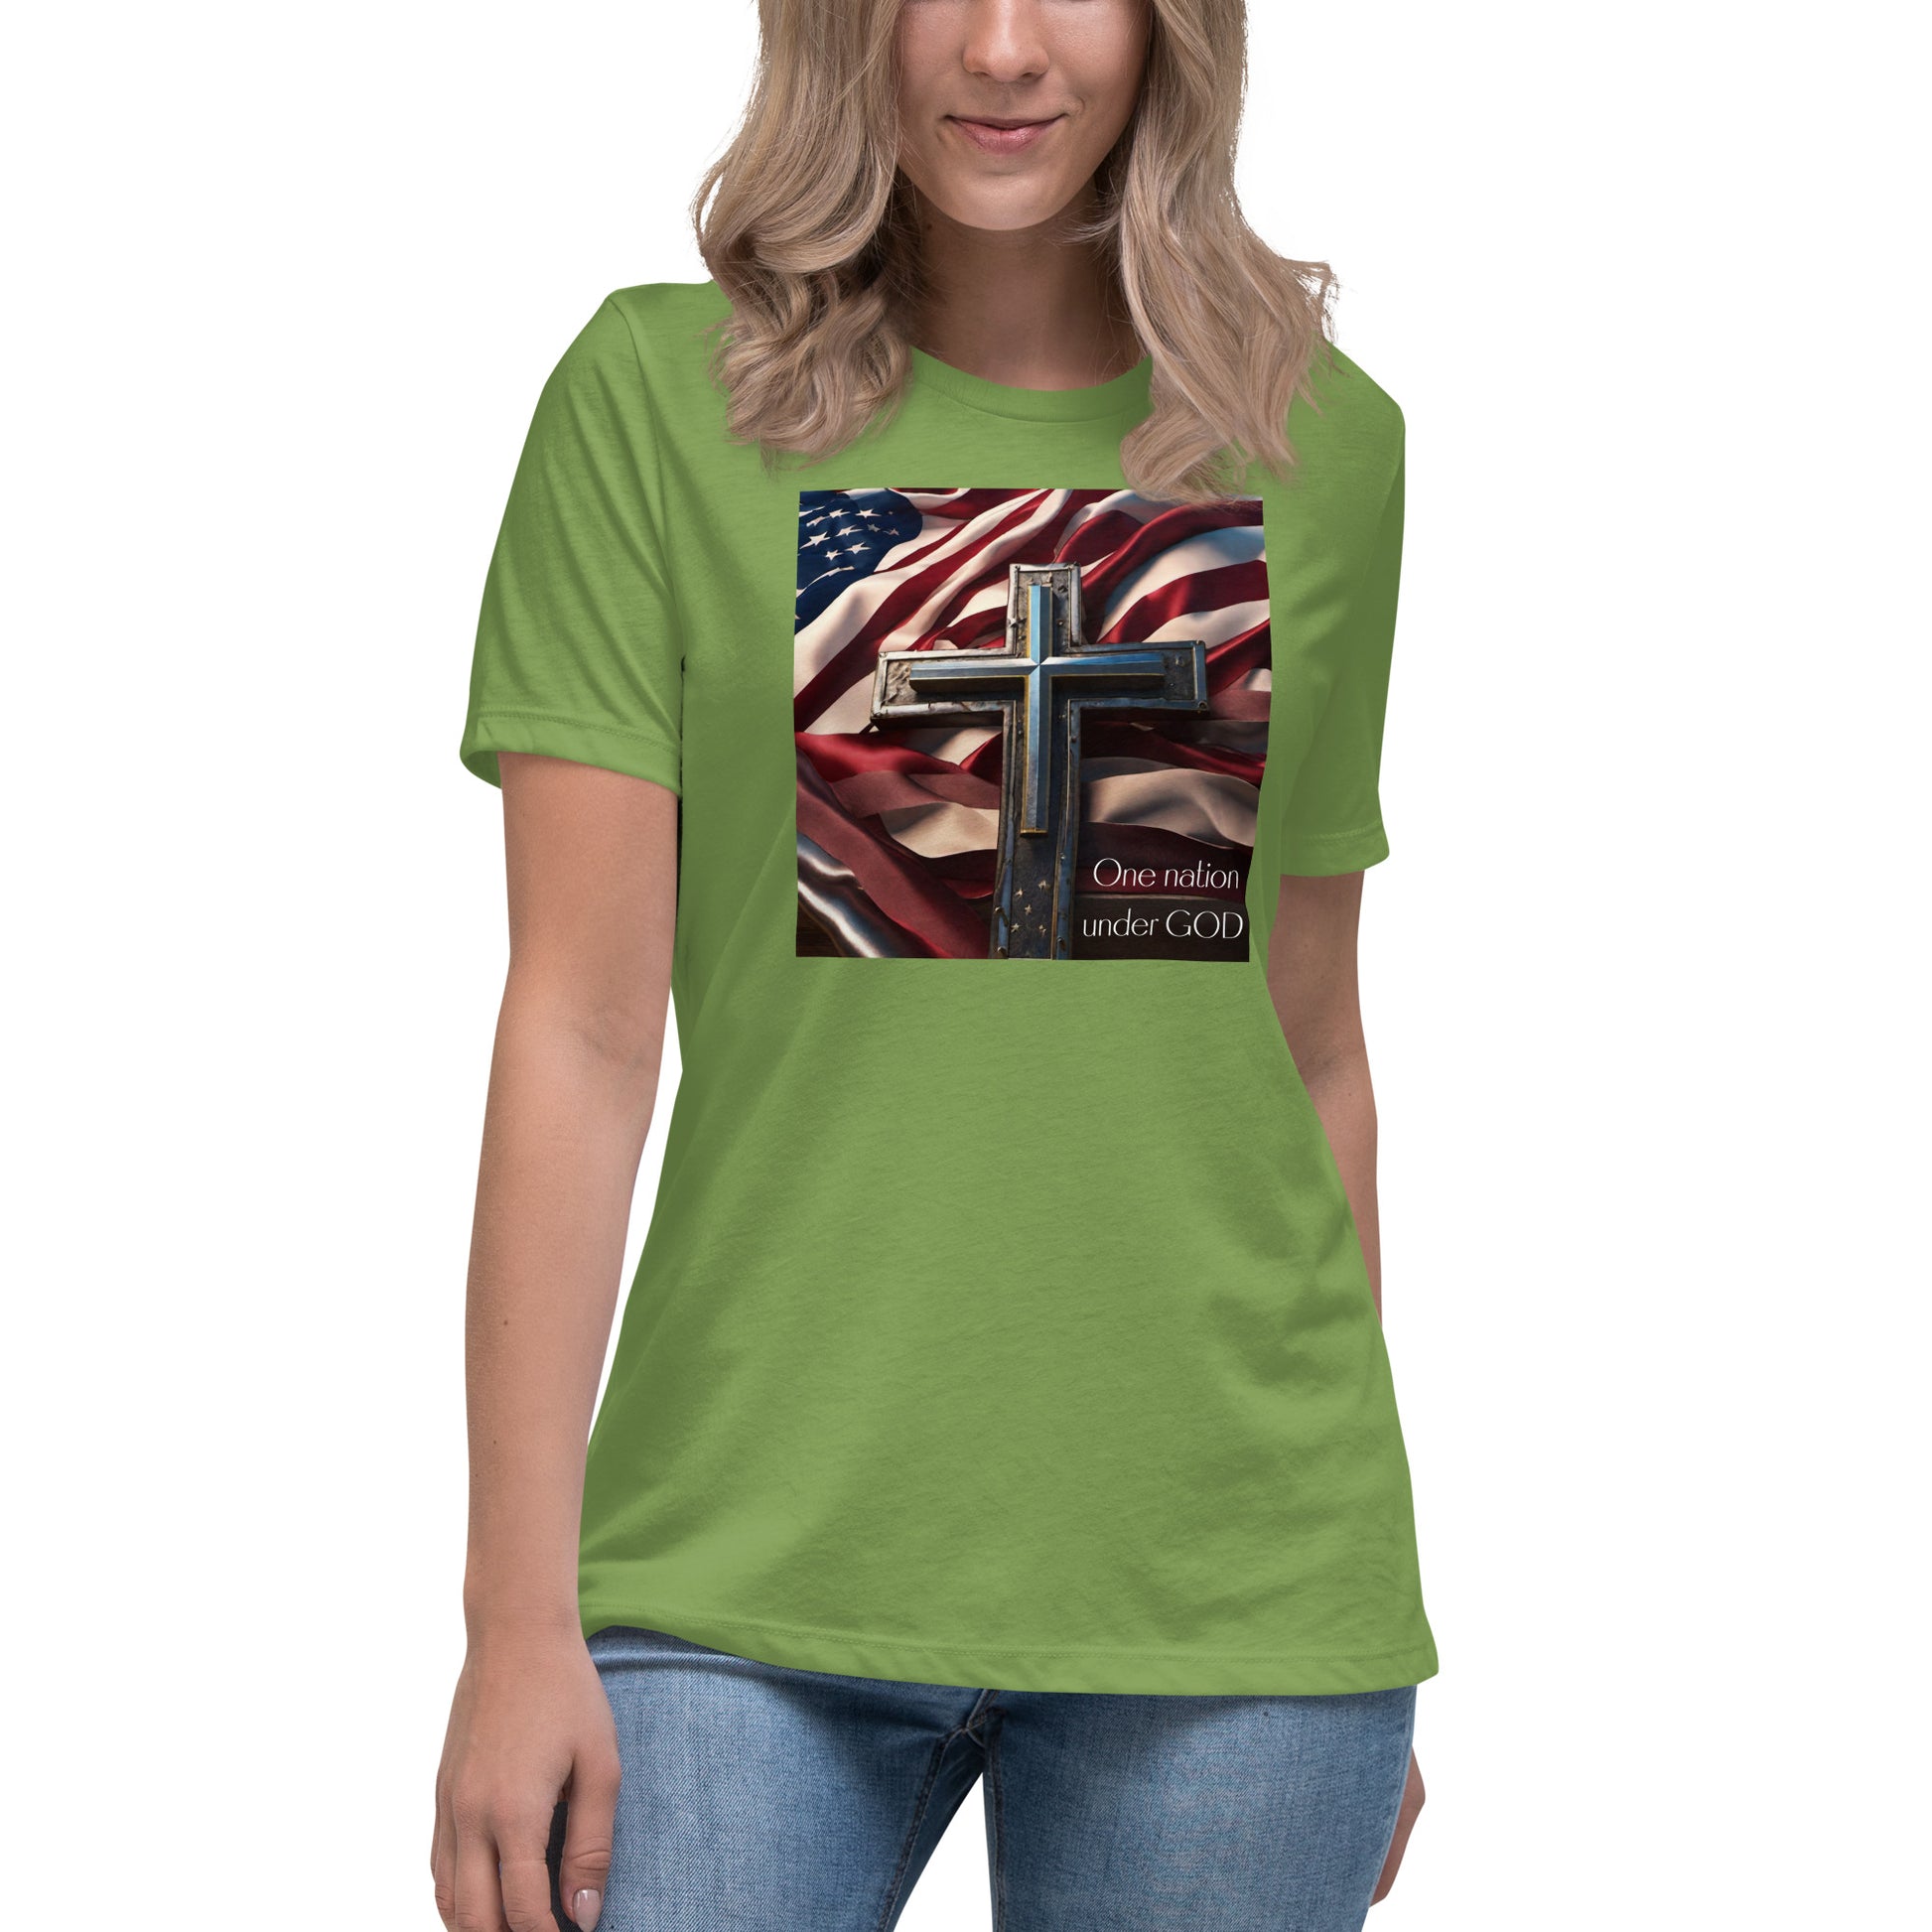 Patriotic Graphic Women's T-shirt